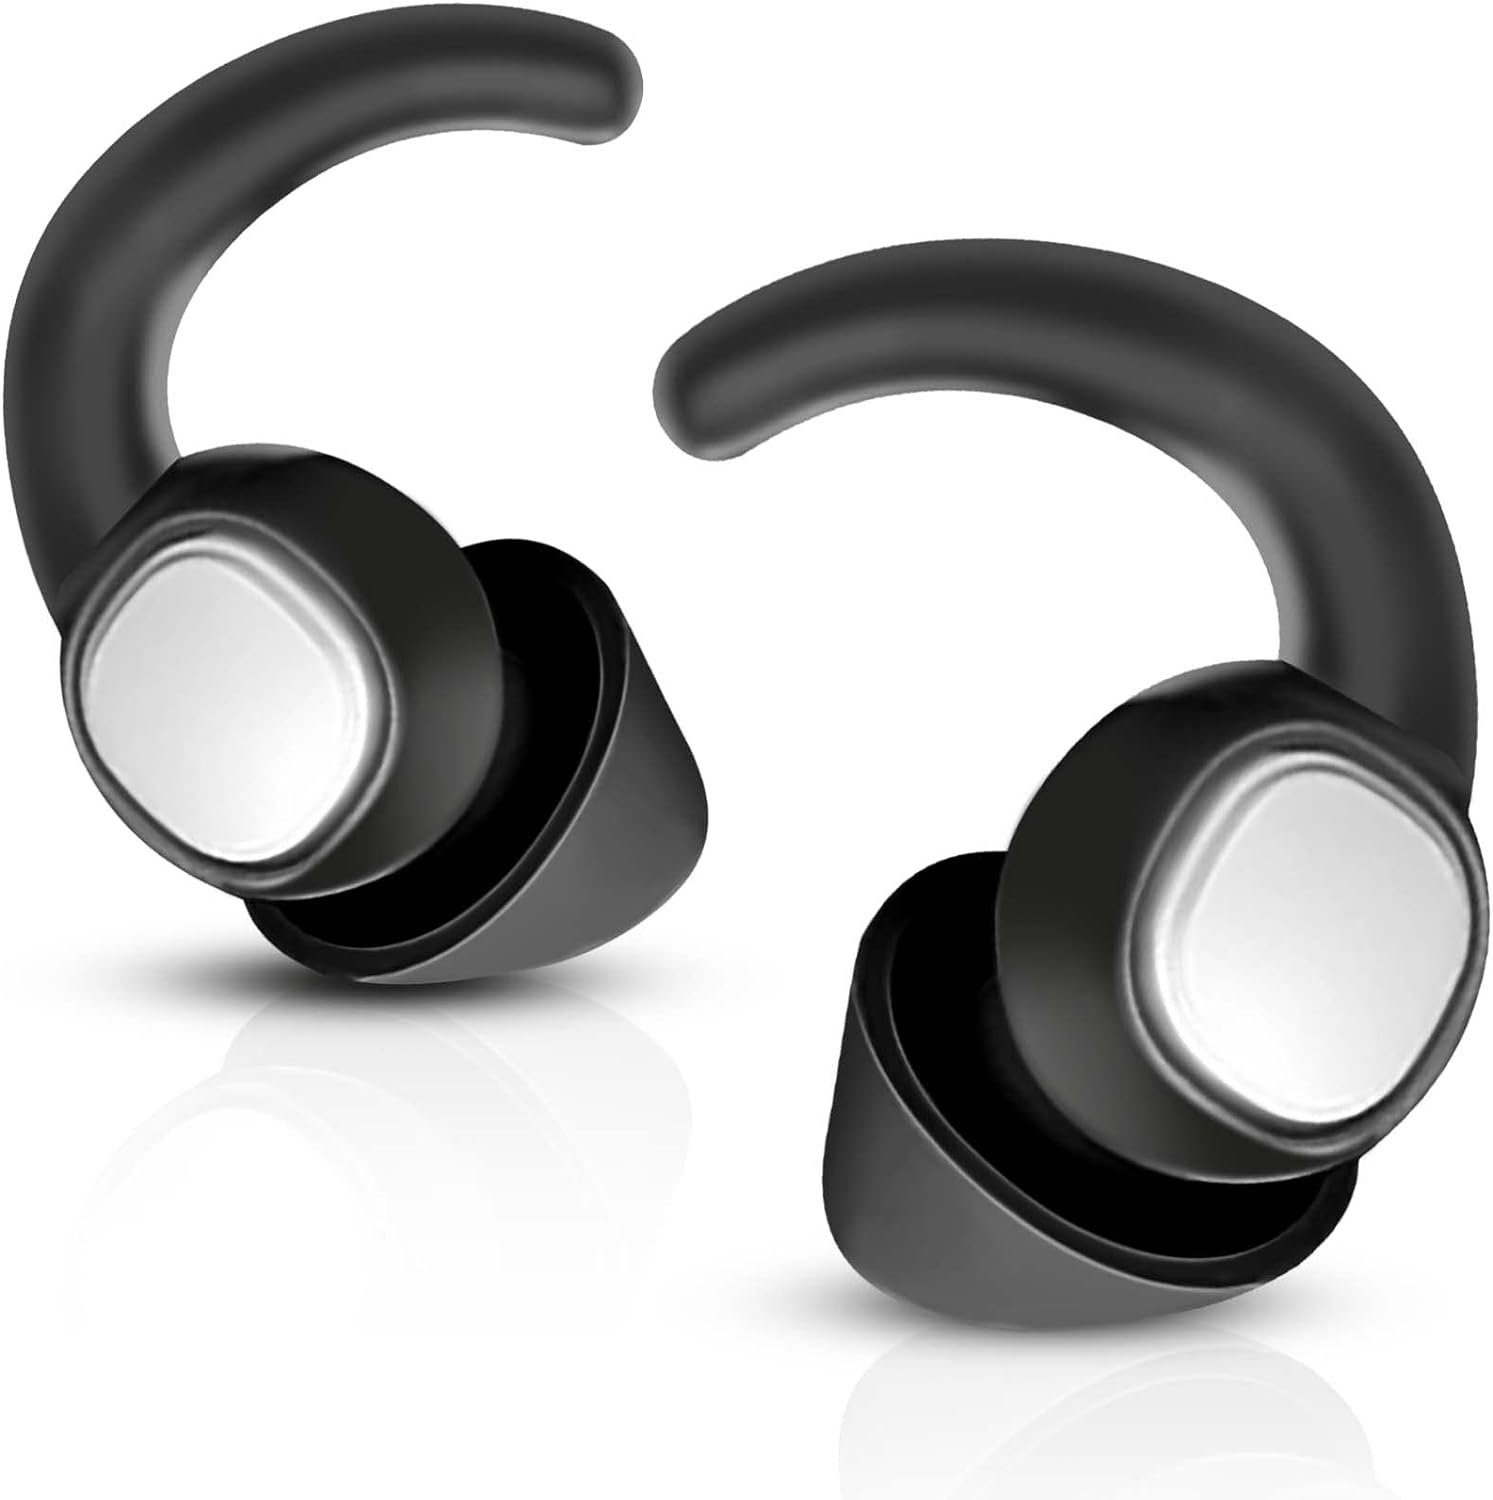 Coonoor Gehörschutzstöpsel Ohrstöpsel zum Schlafen, Wiederverwendbare, Ohrenstöpsel für wiederverwendbarer Silikon High Fidelity Gehörschutz